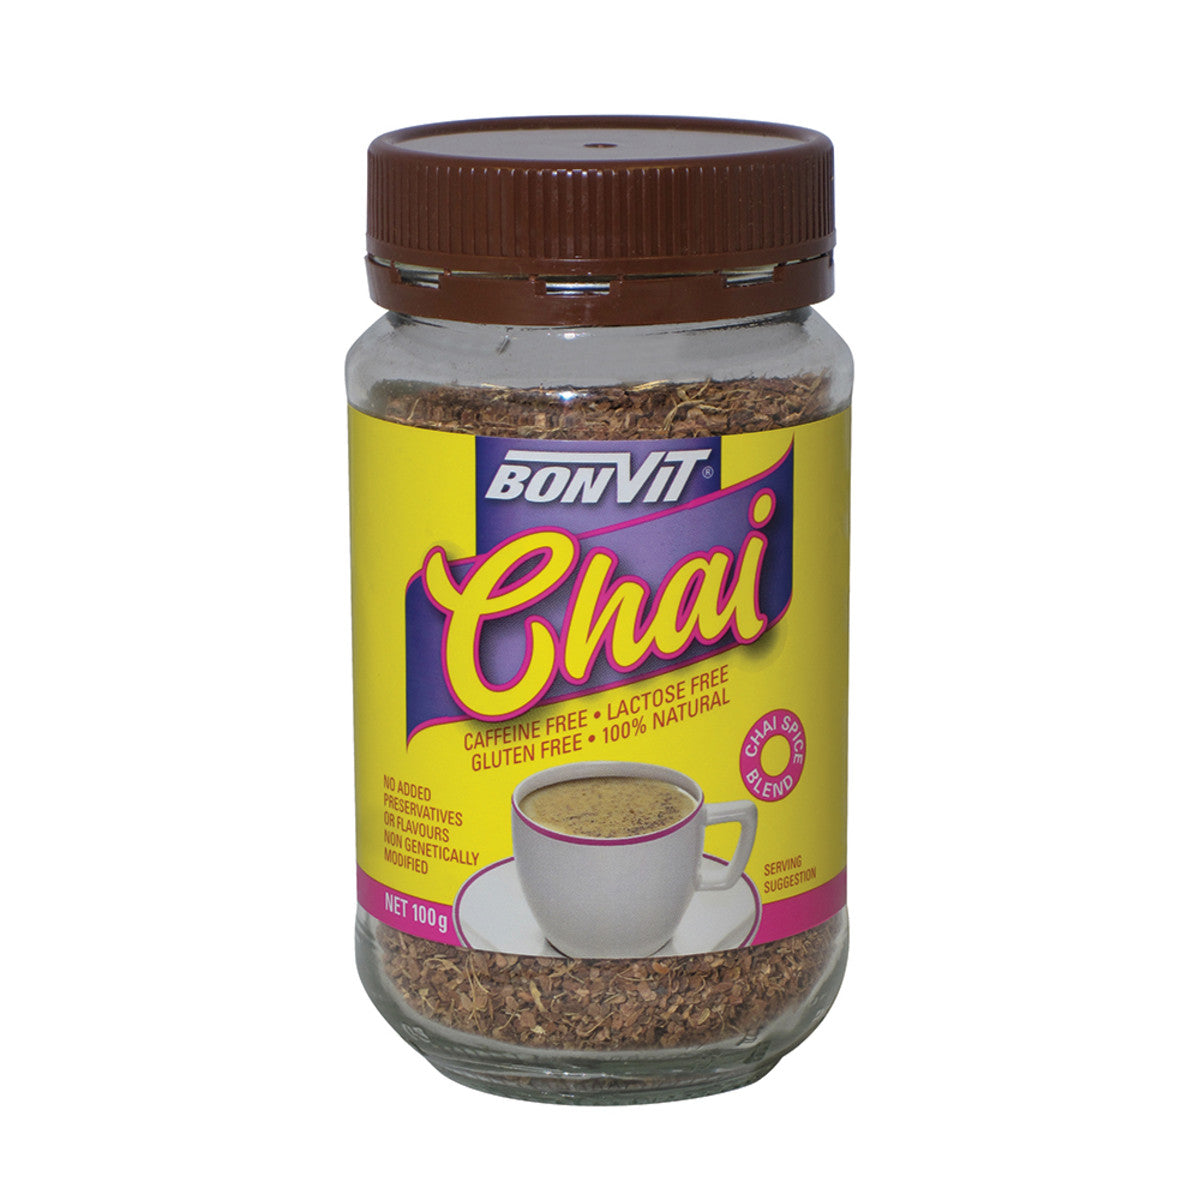 Bonvit - Chai Spice Blend